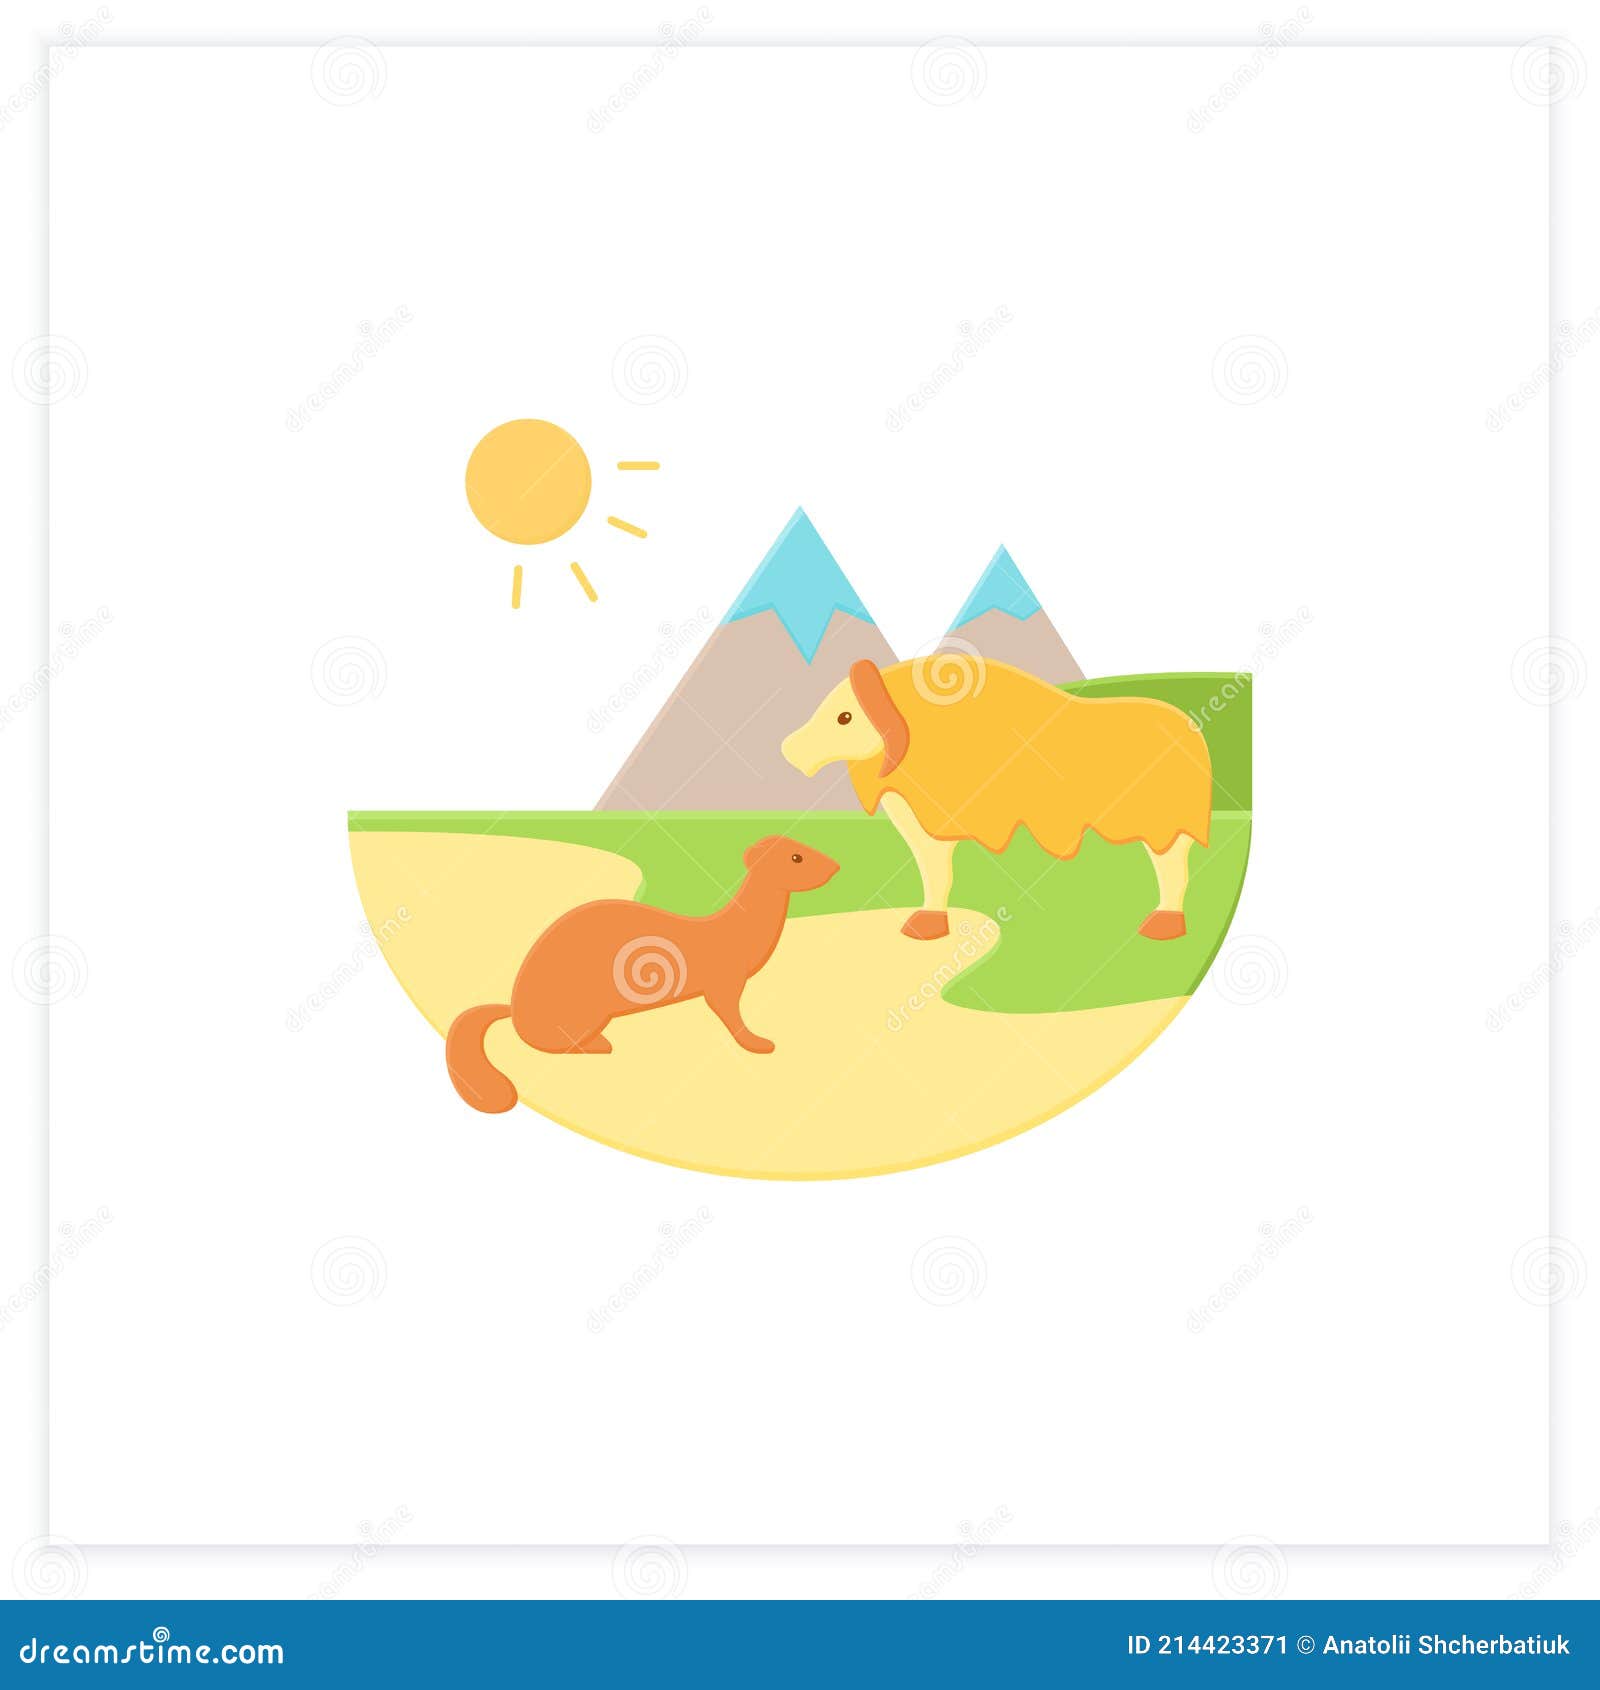 Tundra flat icon stock vector. Illustration of treeles - 214423371